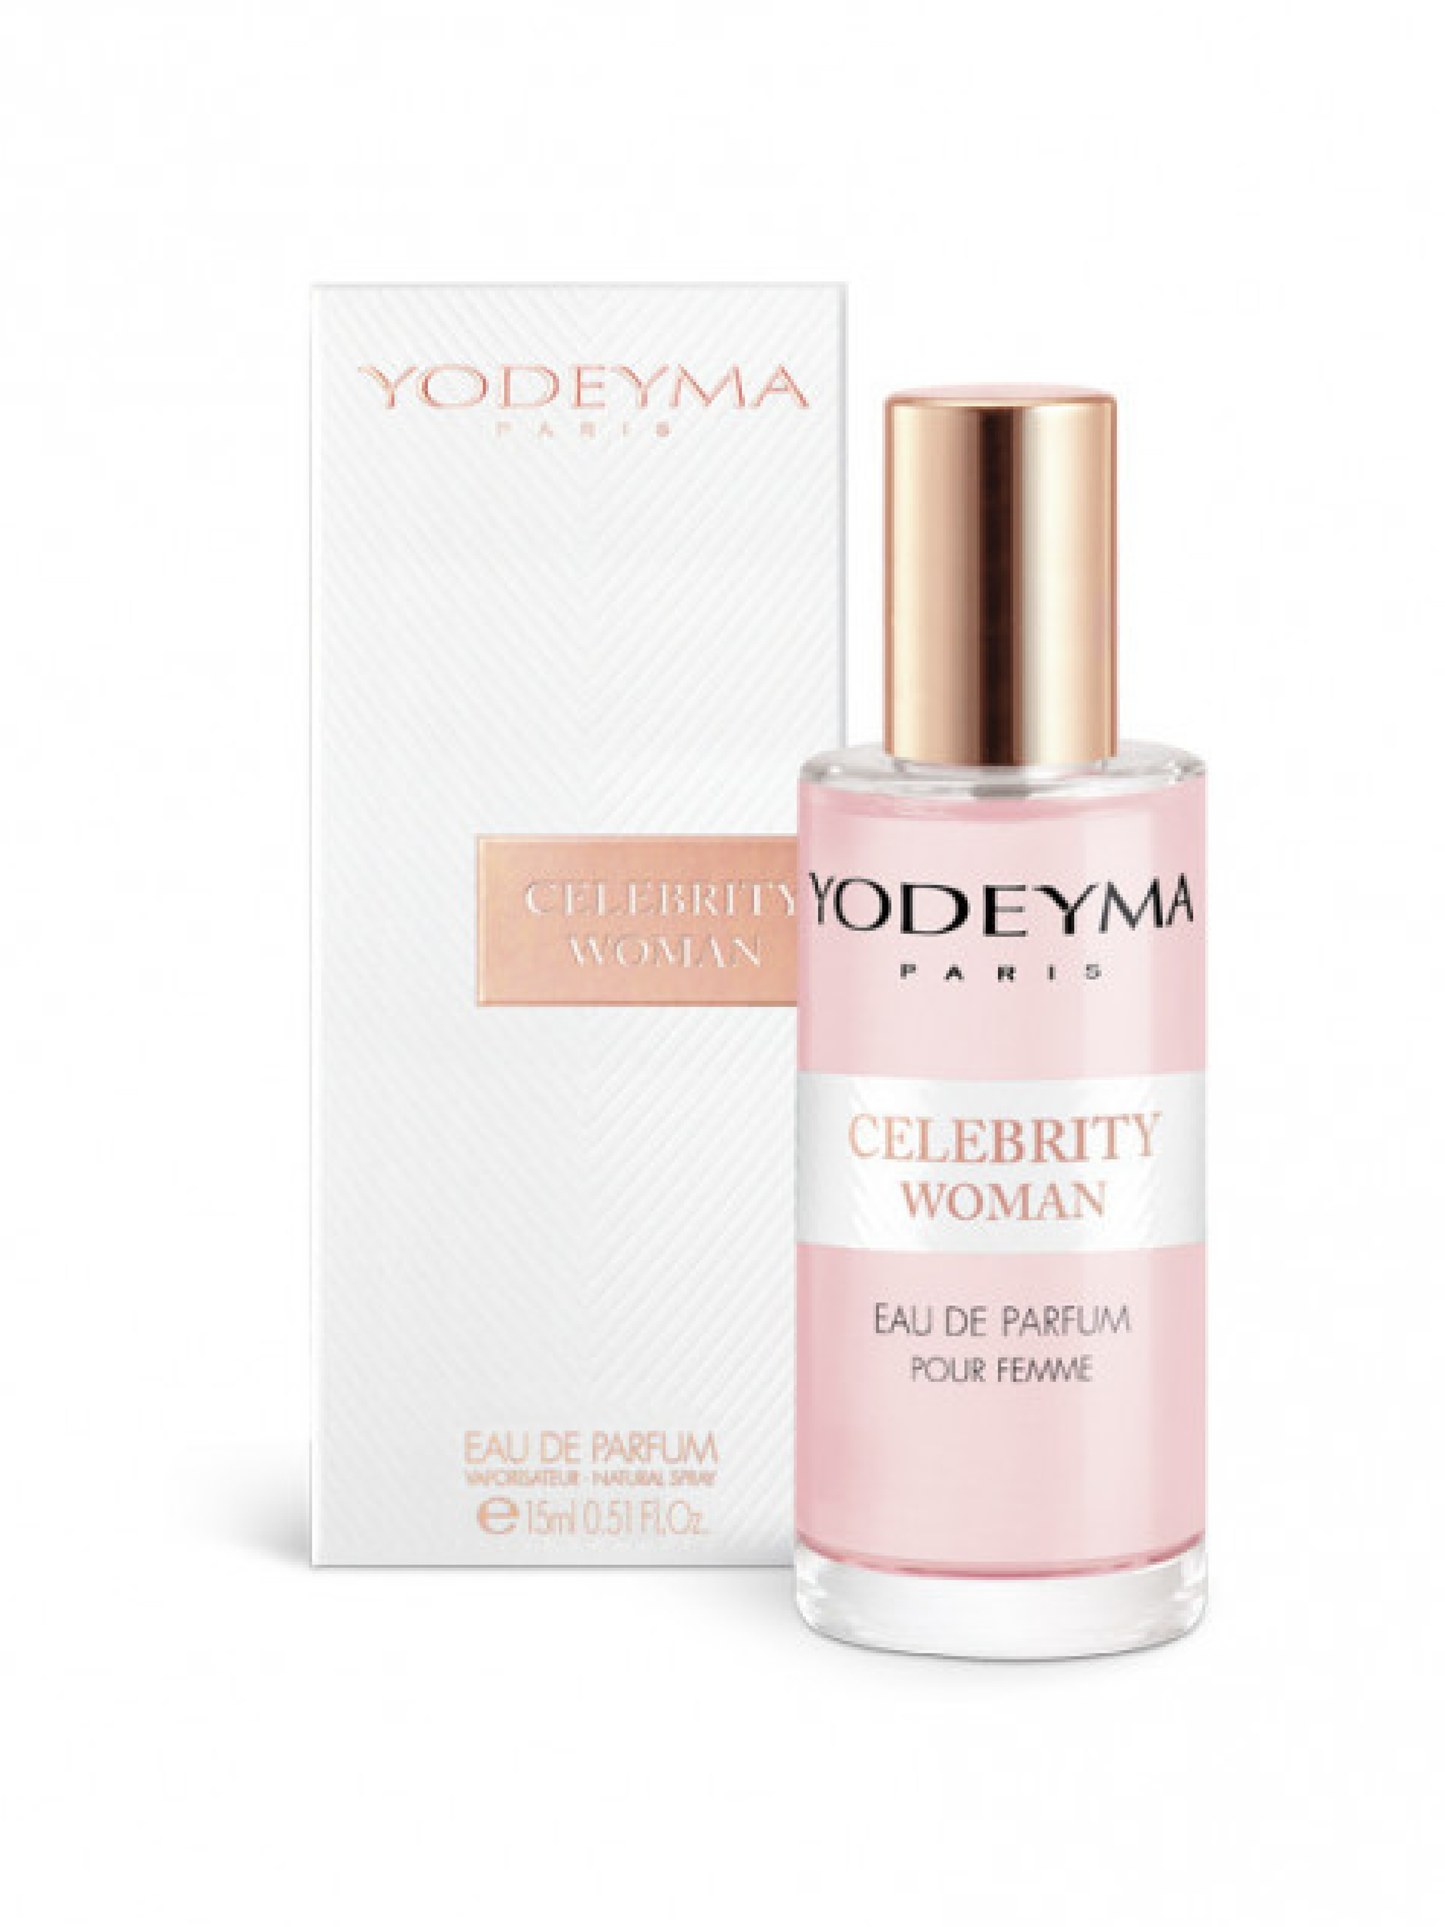 Yodeyma Celebrity Woman 15ml perfume